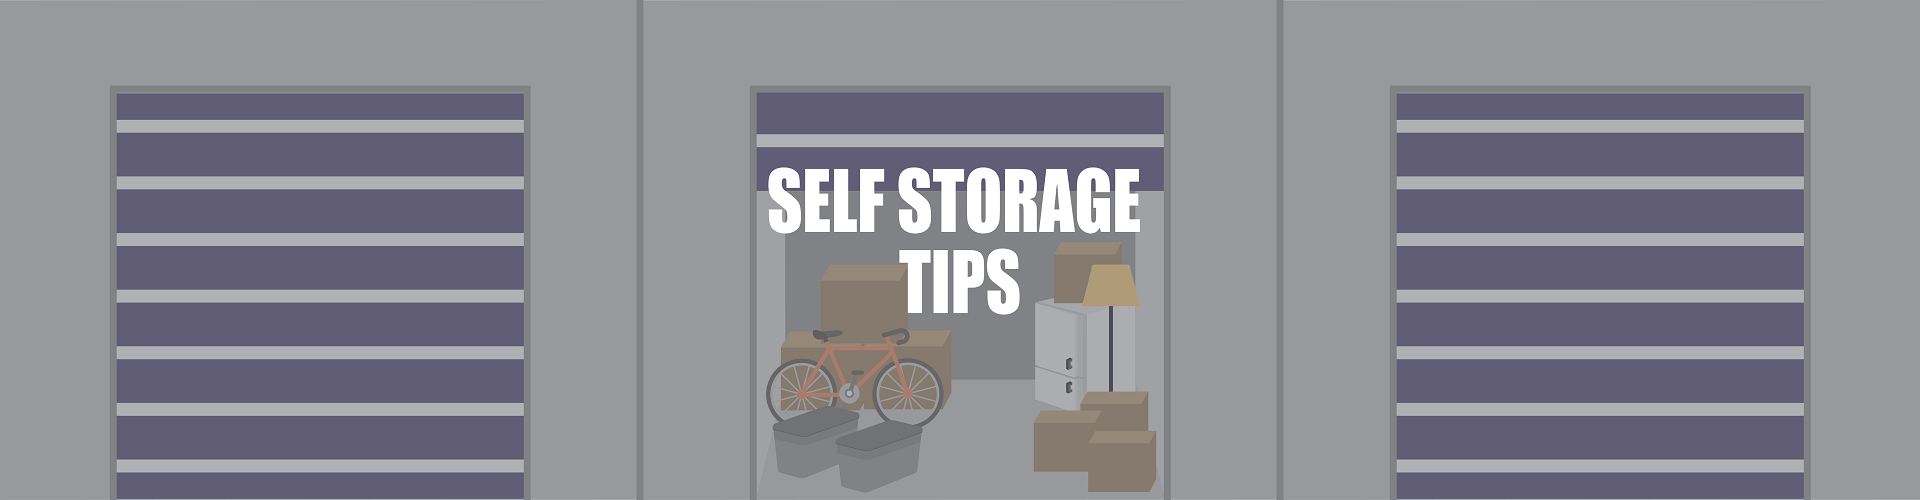 self storage tips from Pioneer Valley Storage in Massachusetts